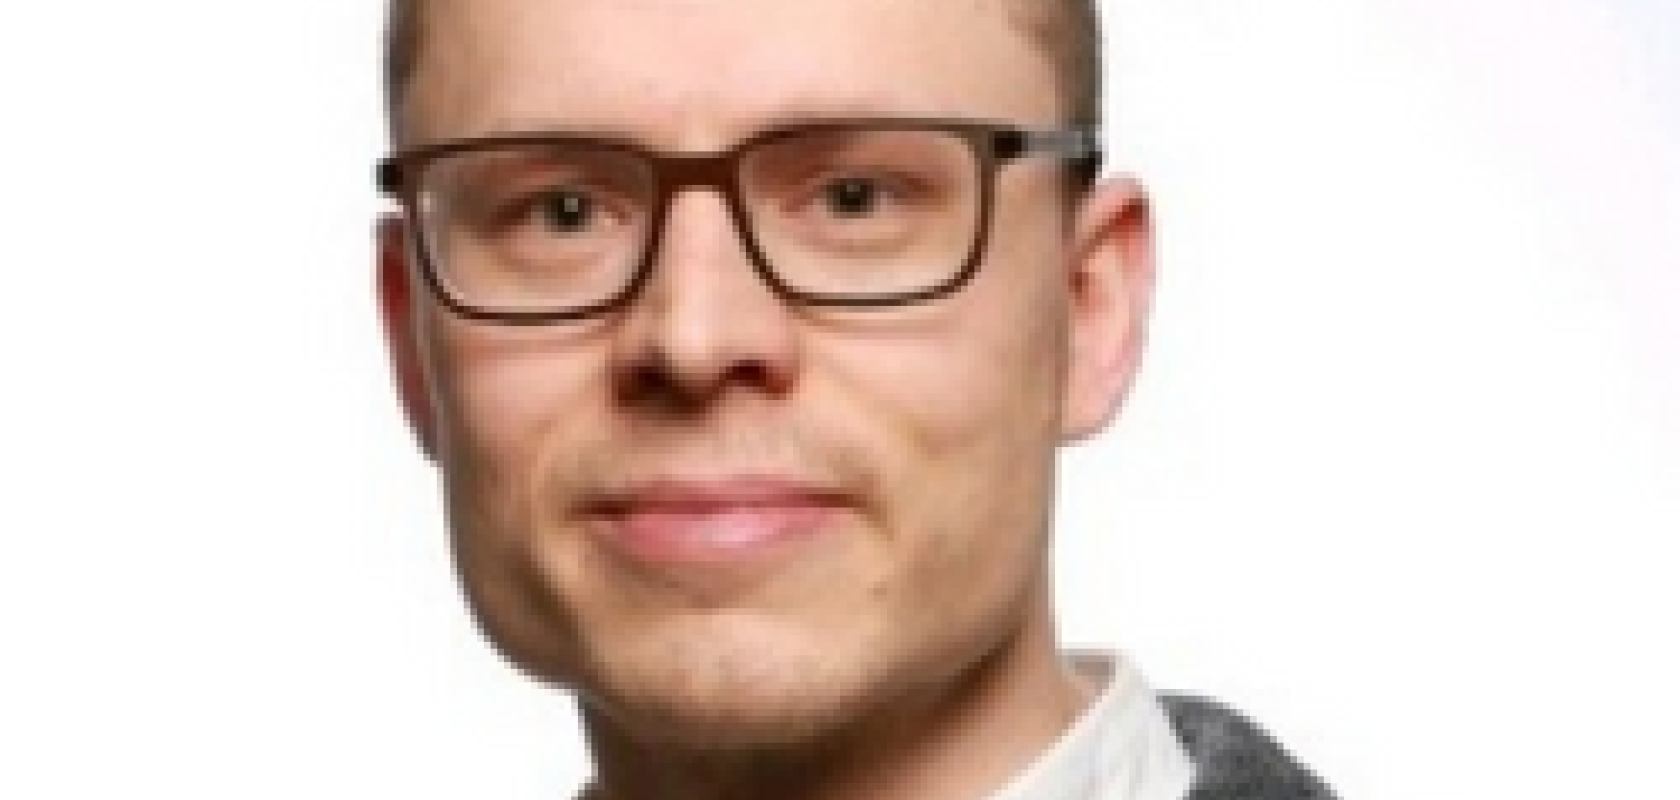 Jussi-Pekka Penttinen, Co-Founder, CEO and CTO, Vexlum